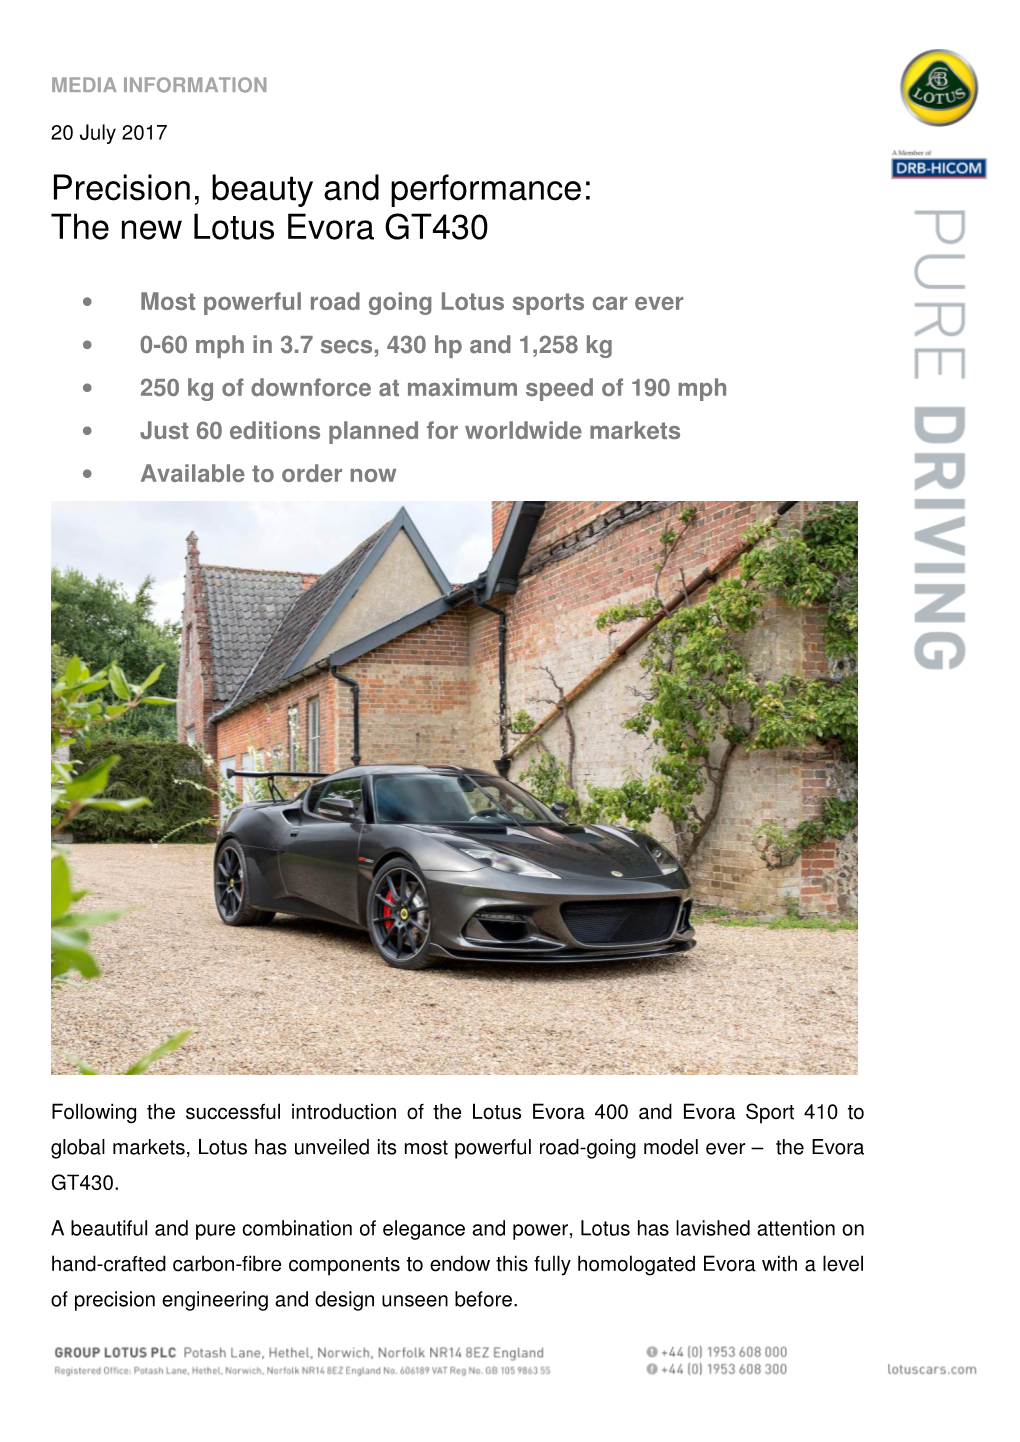 The New Lotus Evora GT430